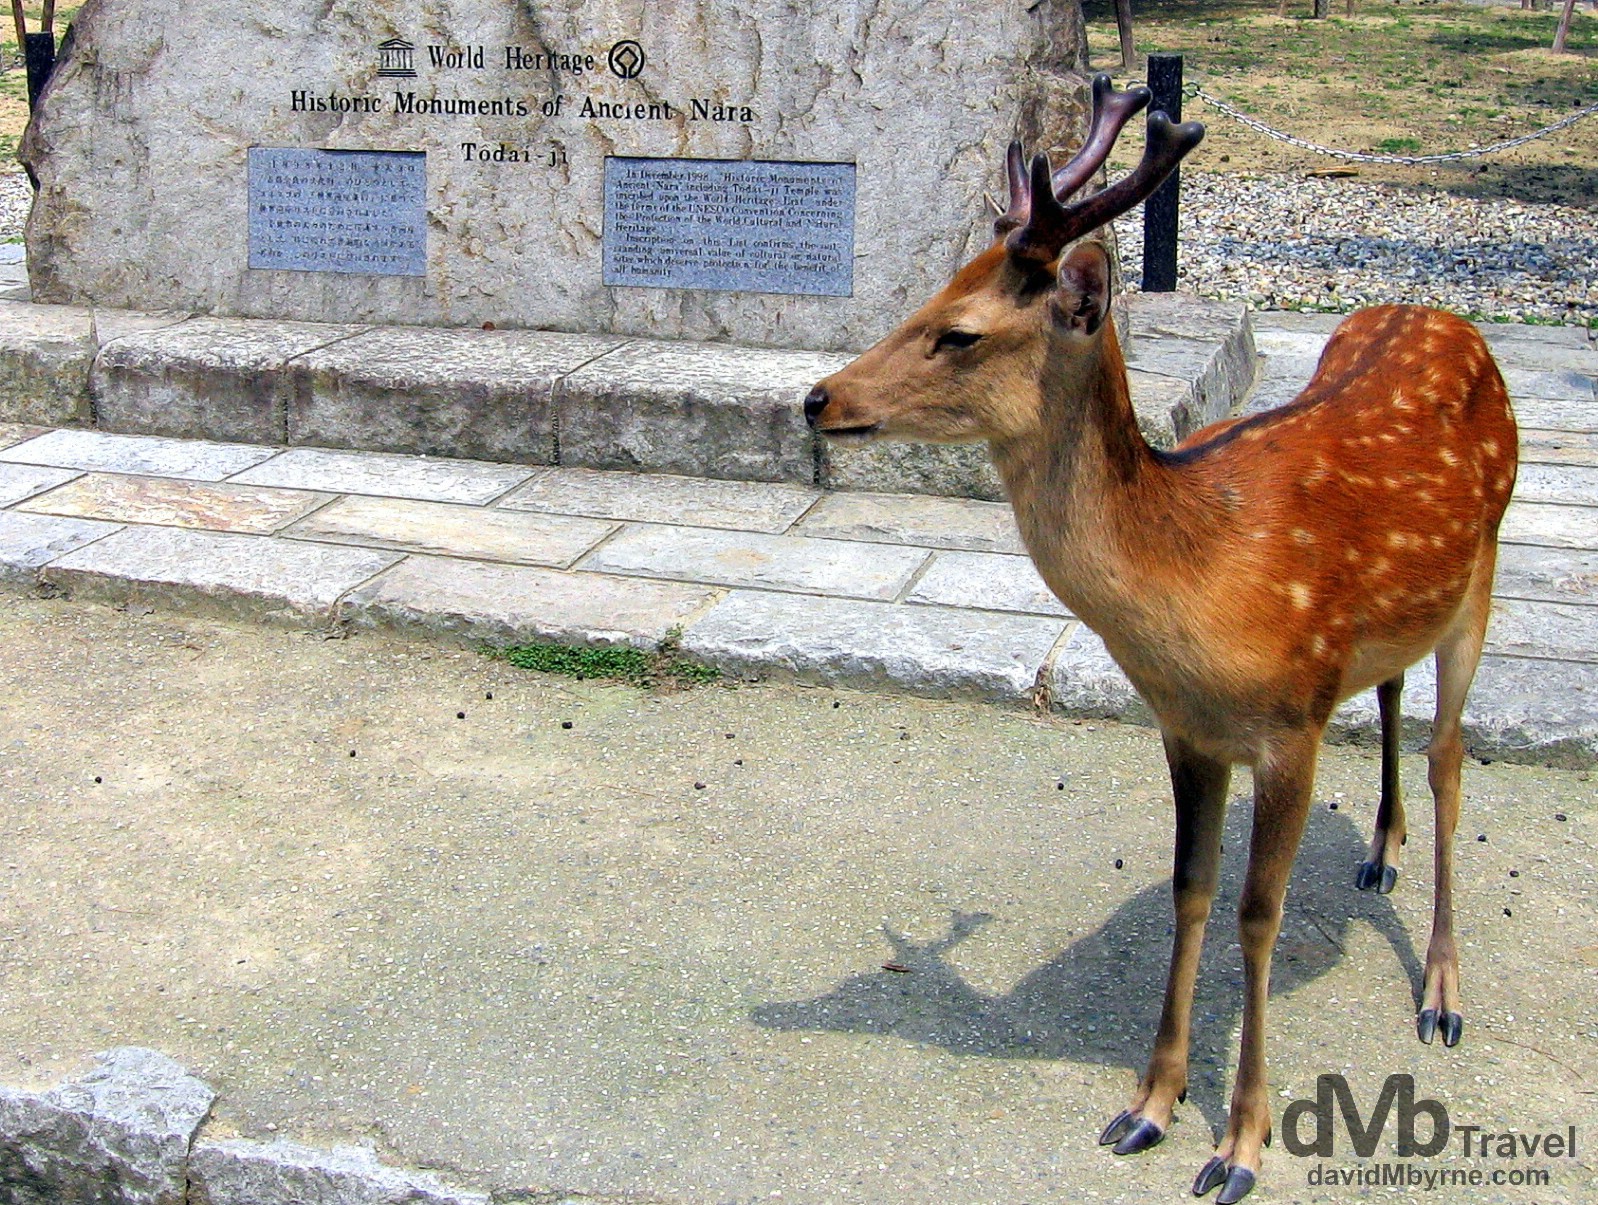 A deer fronting the UNESCO plinth in Nara Koen (Park), Nara, Honshu, Japan. July 19th, 2005.